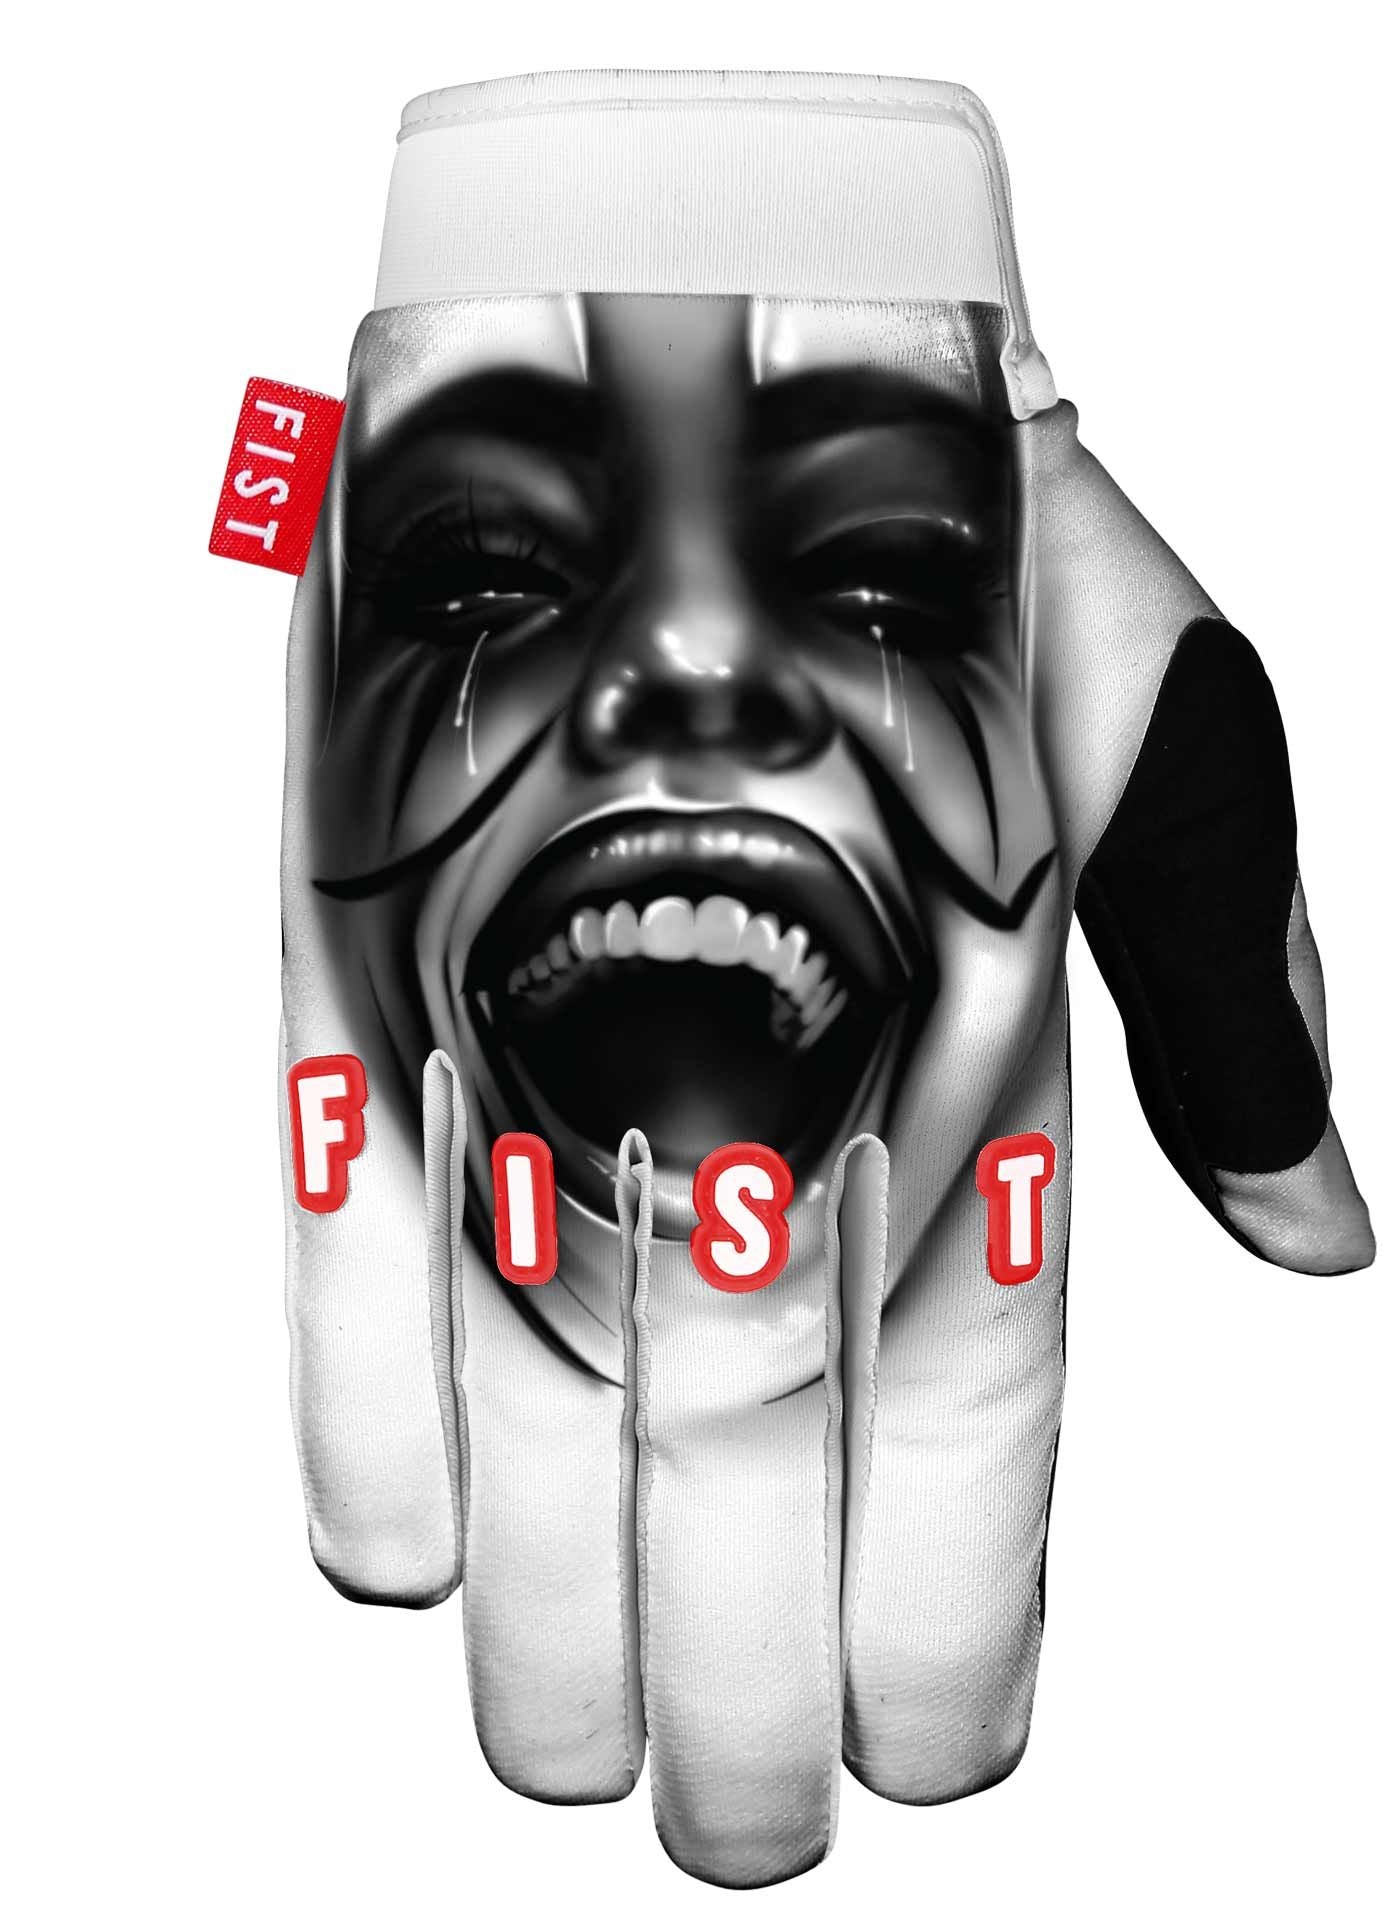 Fist Handwear Strapped Glove - Creed No Risk